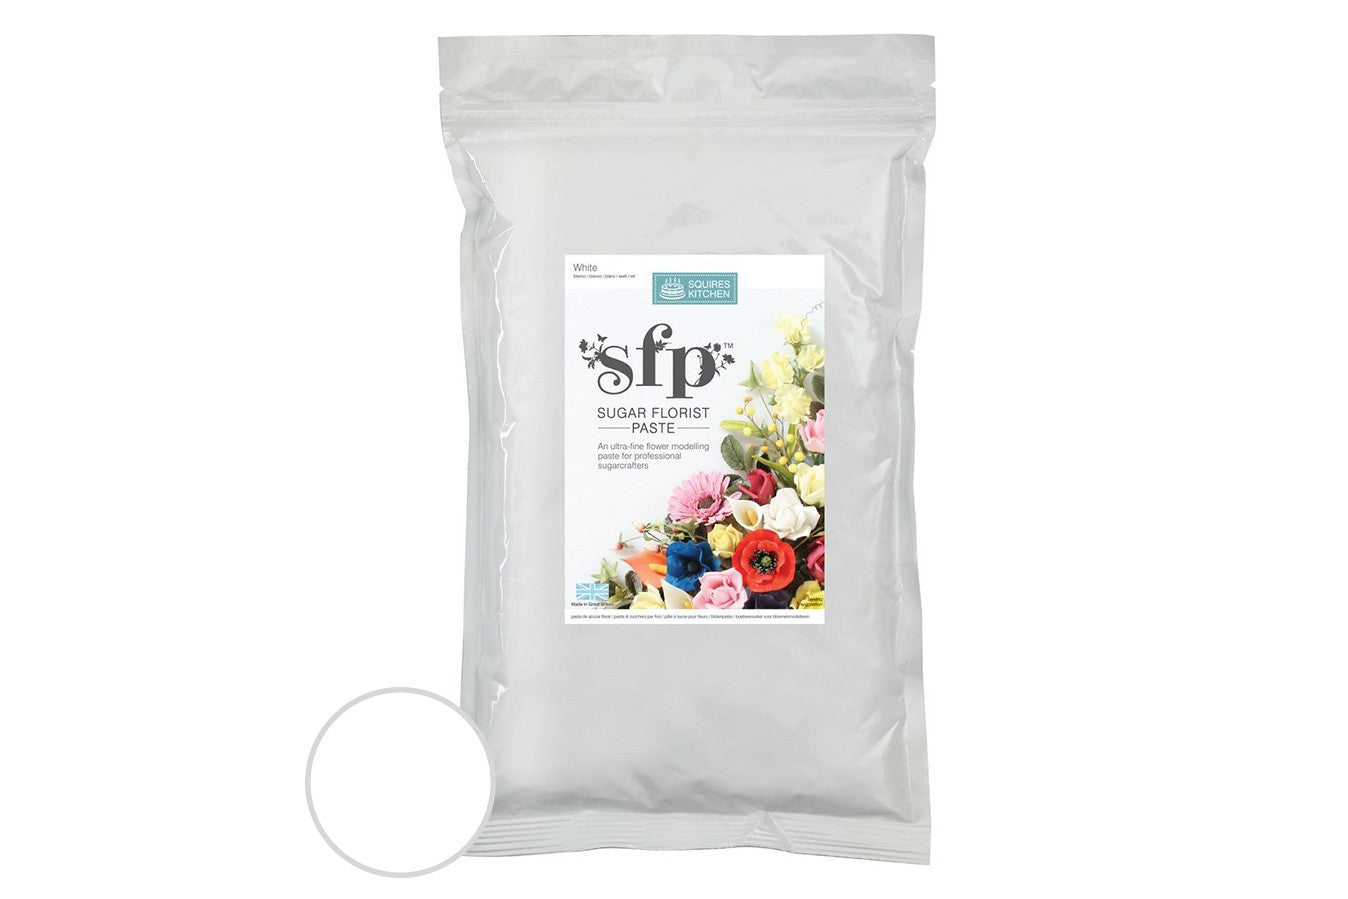 Squires Sugar Florist Paste (SFP Gum Paste) - White - 1kg - The Cooks Cupboard Ltd